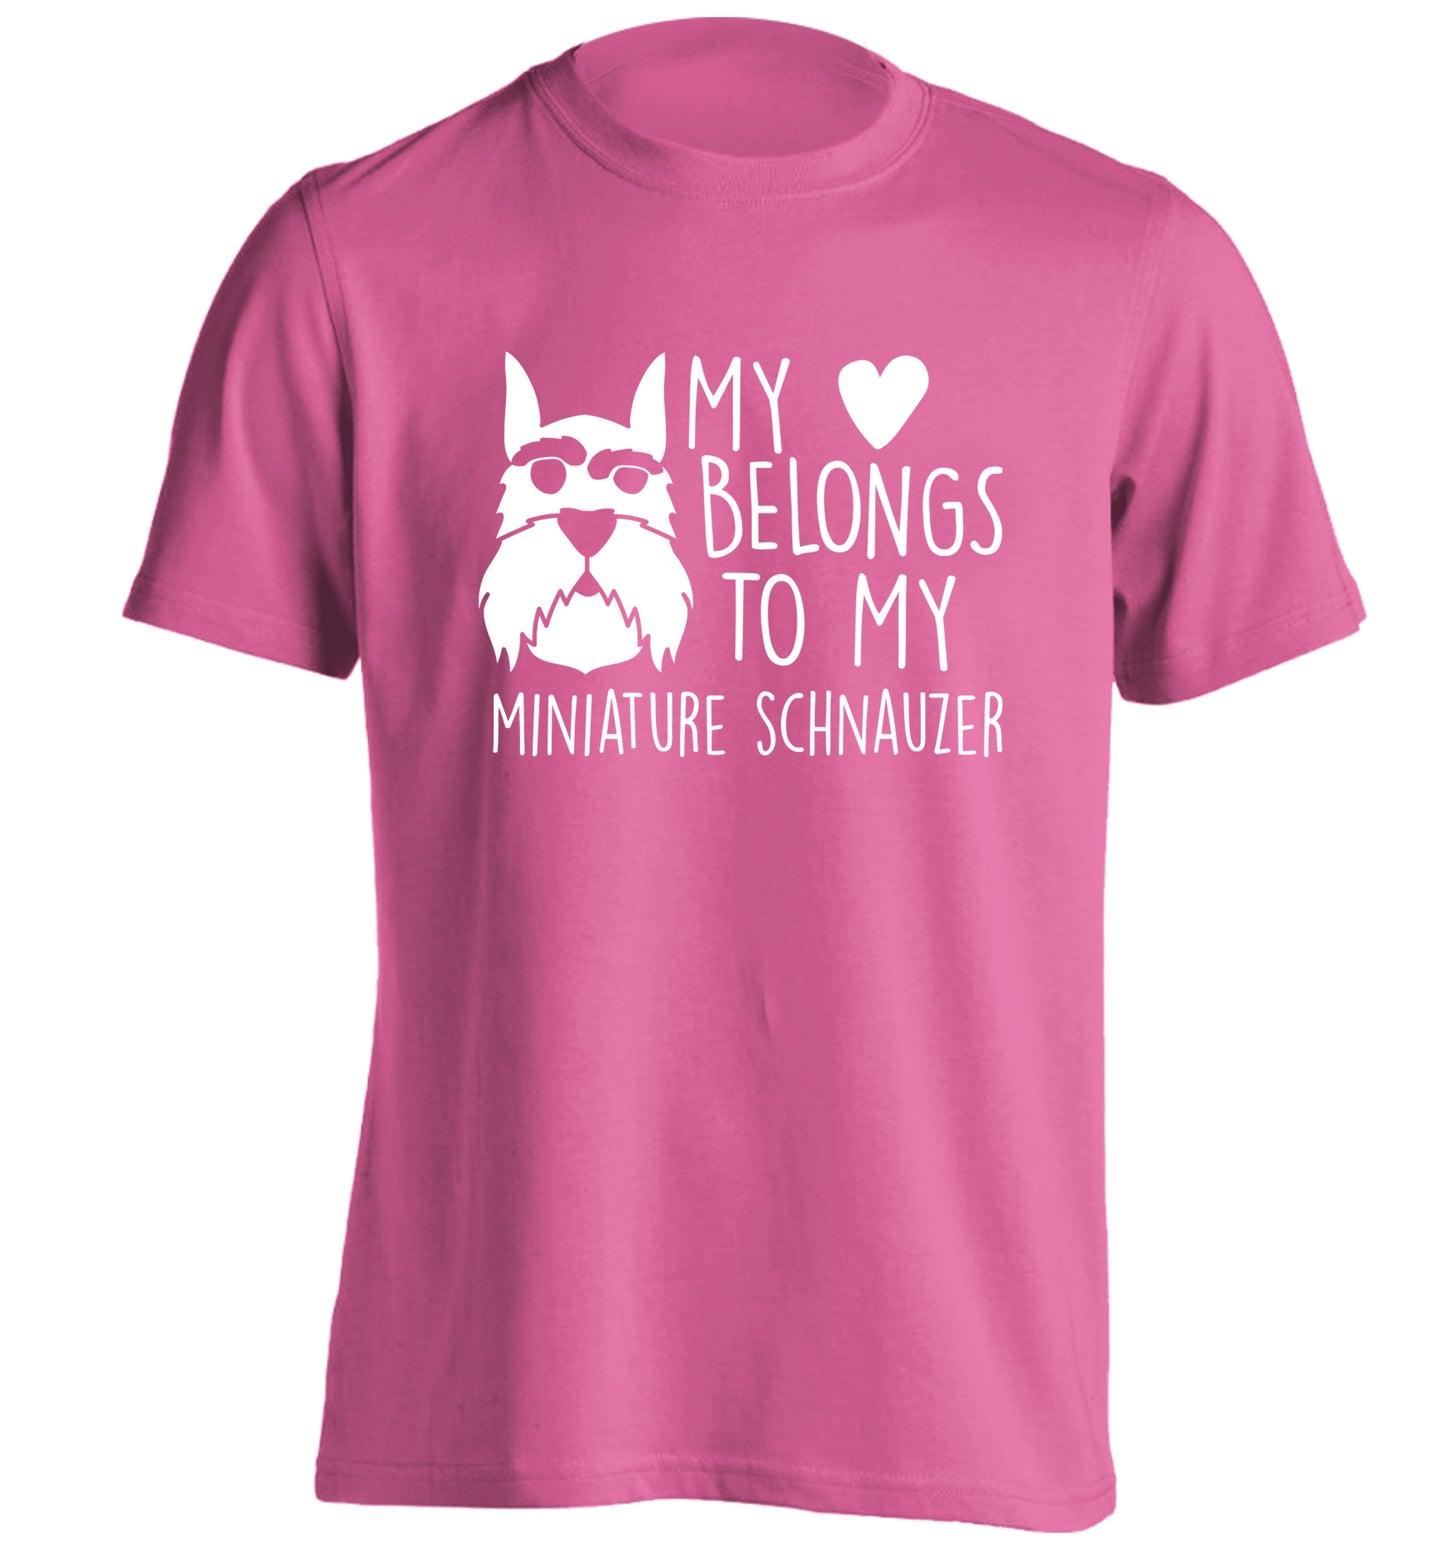 My heart belongs to my miniature schnauzer adults unisex pink Tshirt 2XL